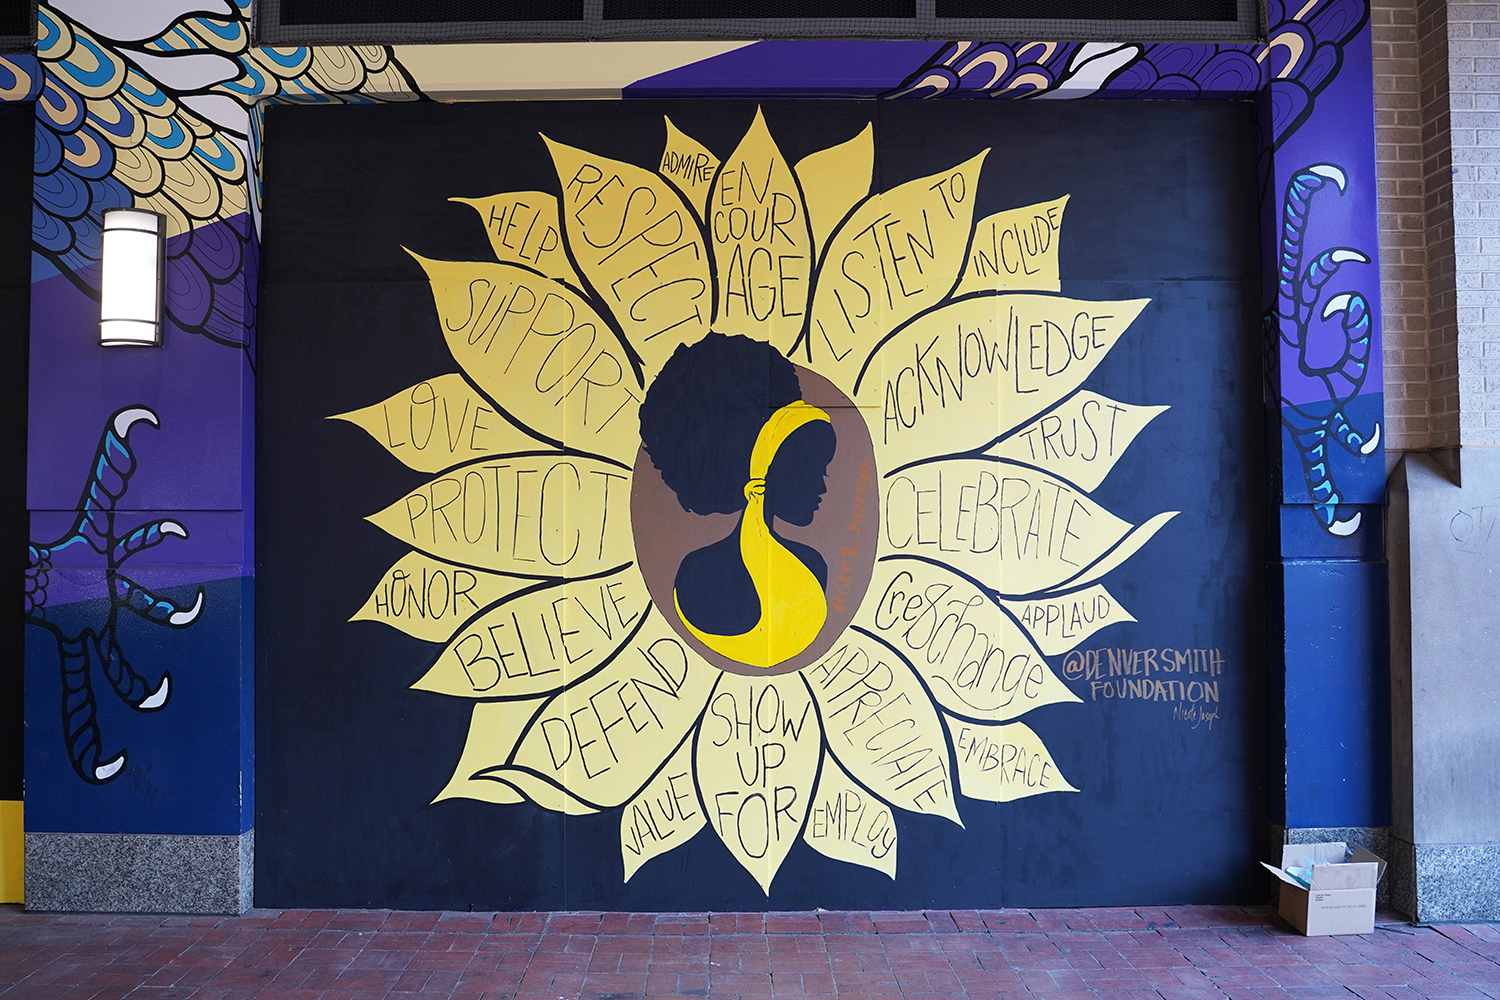 Gallery Place Murals 4.1: Sunflower, by Denver Smith Foundation & Nicole Joseph